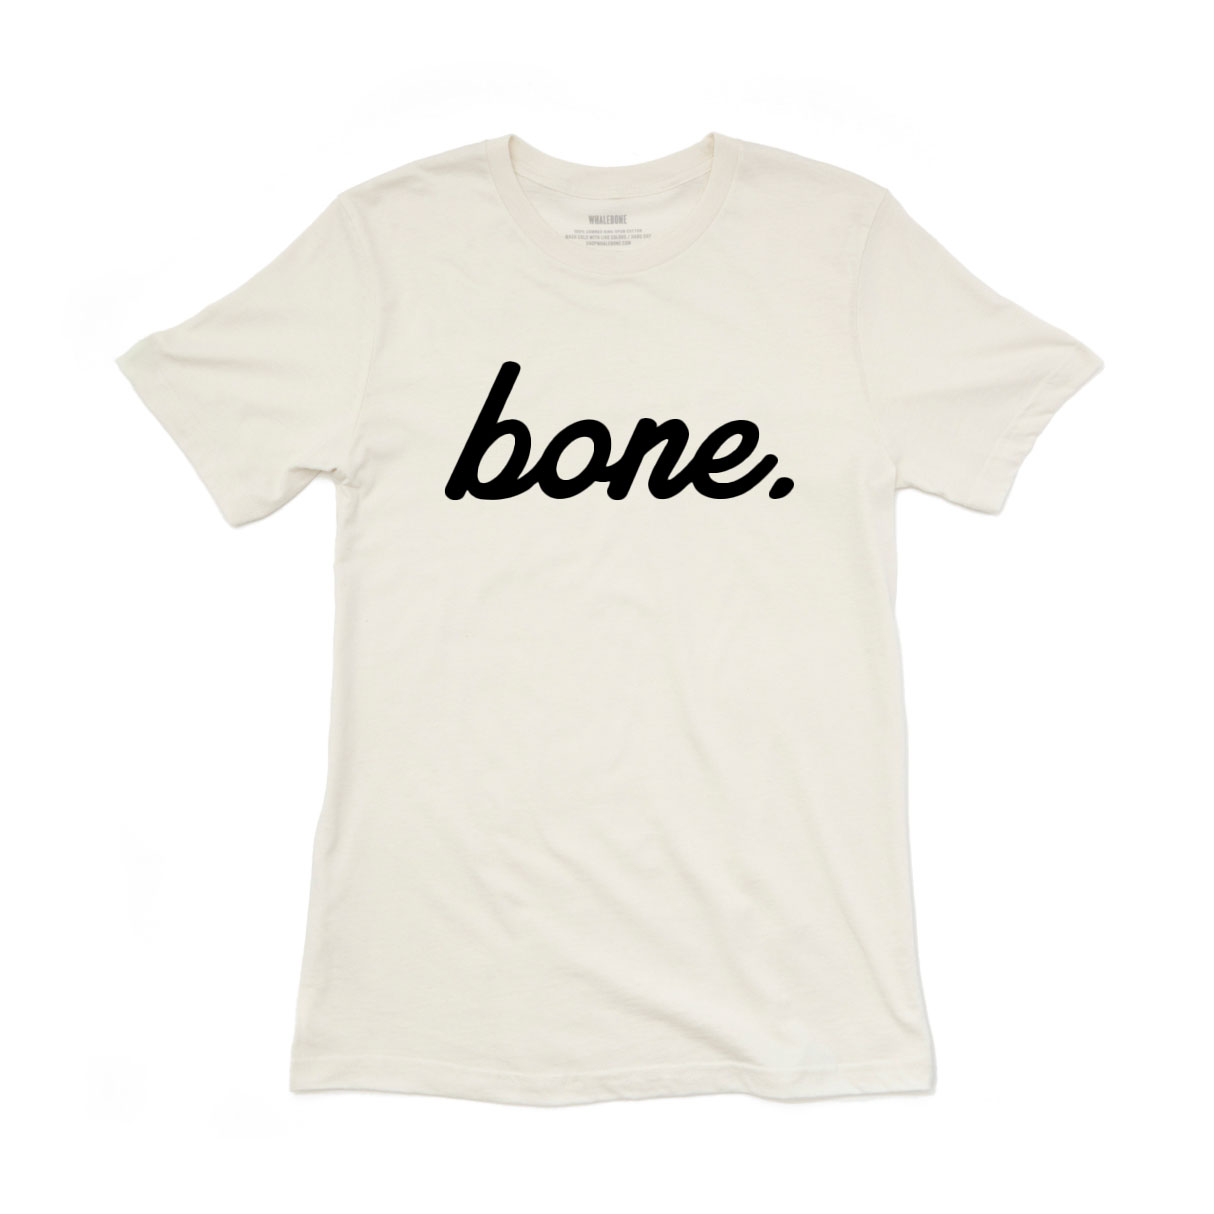 bone-tee-white-black